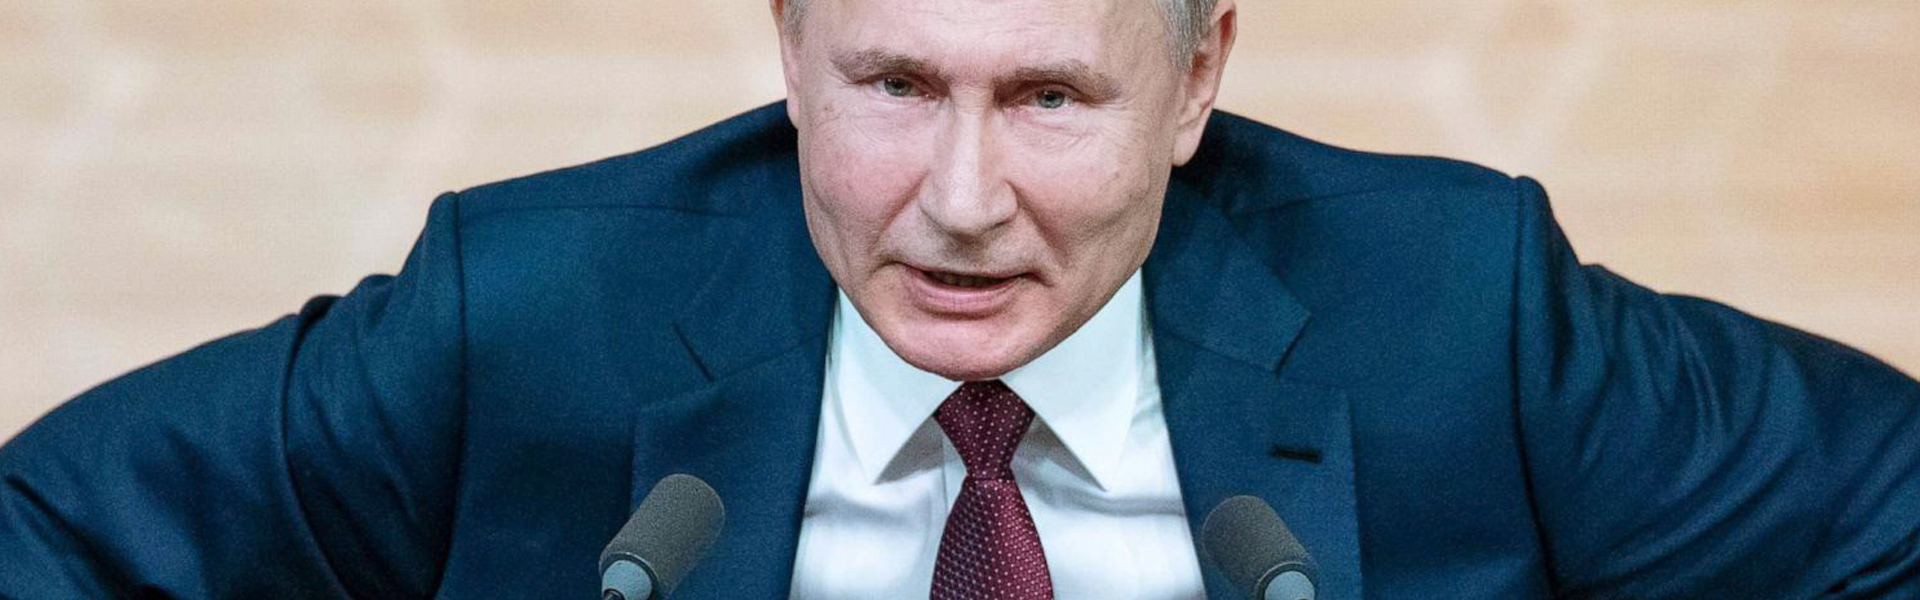 Шарманка Путина: все хорошо, прекрасная маркиза